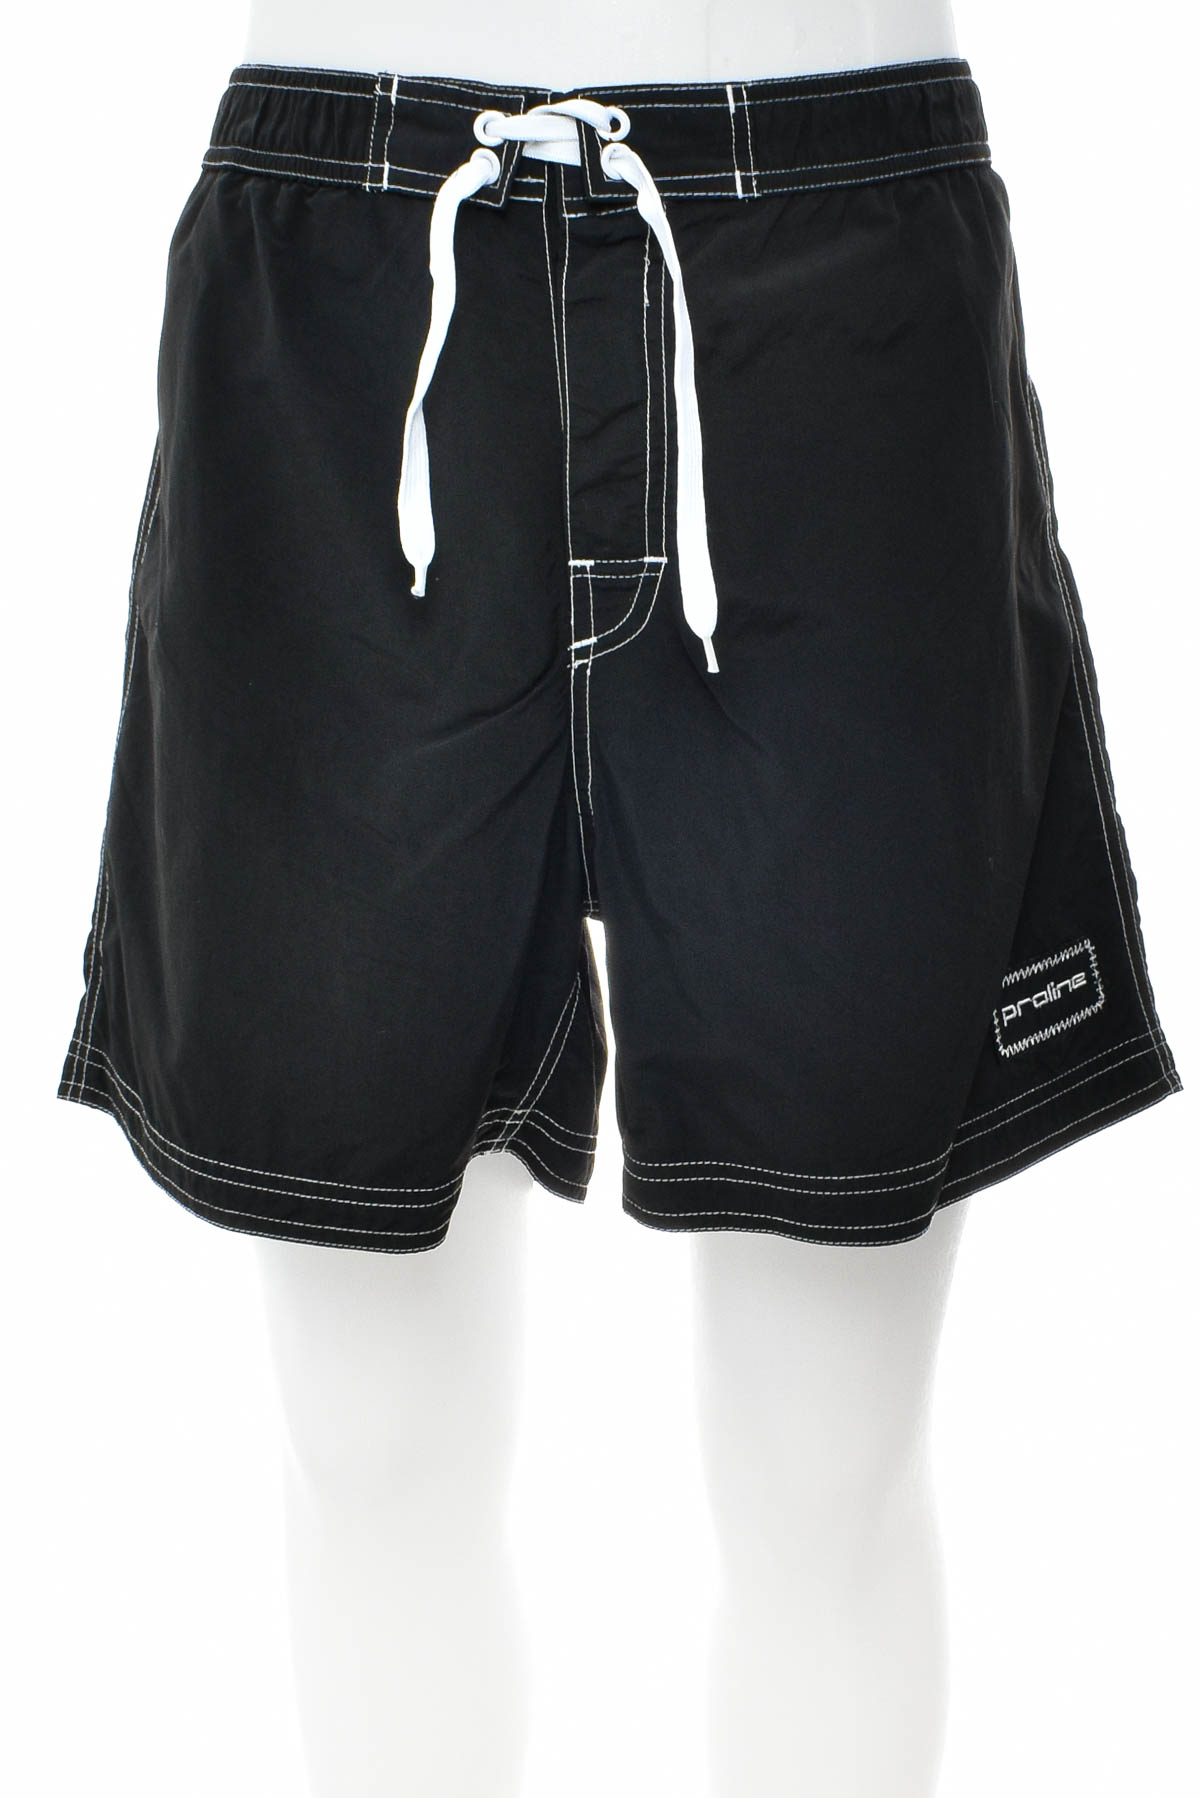 Men's shorts - Proline - 0